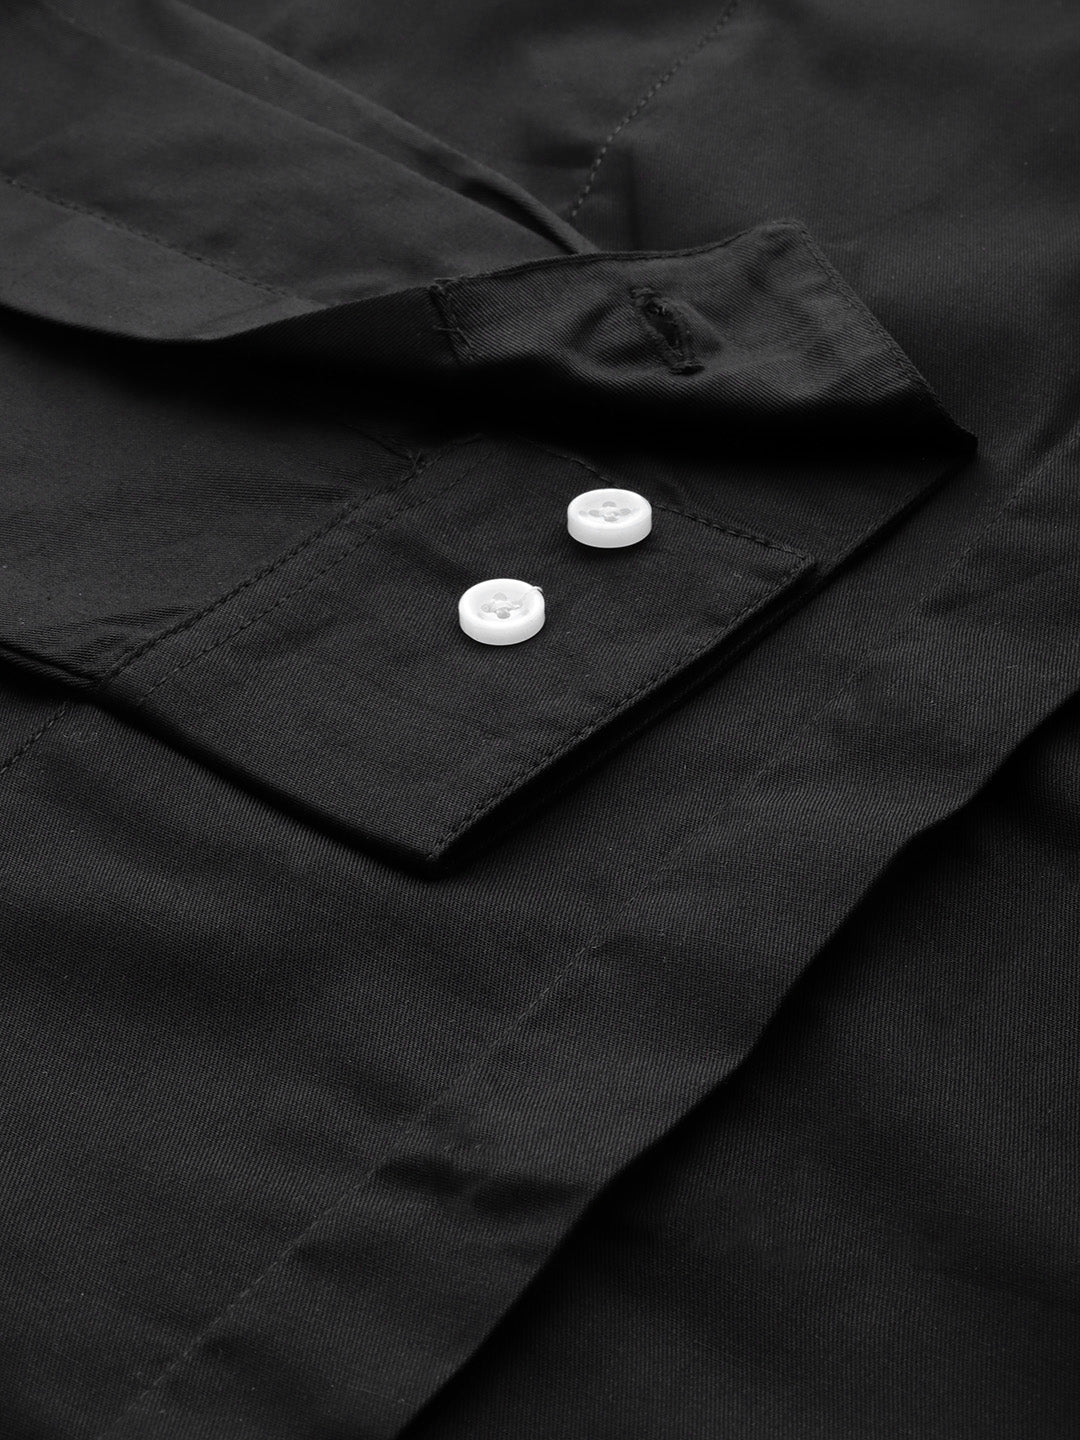 DENNISON Women Black Smart Slim Fit Opaque Colourblocked Casual Shirt